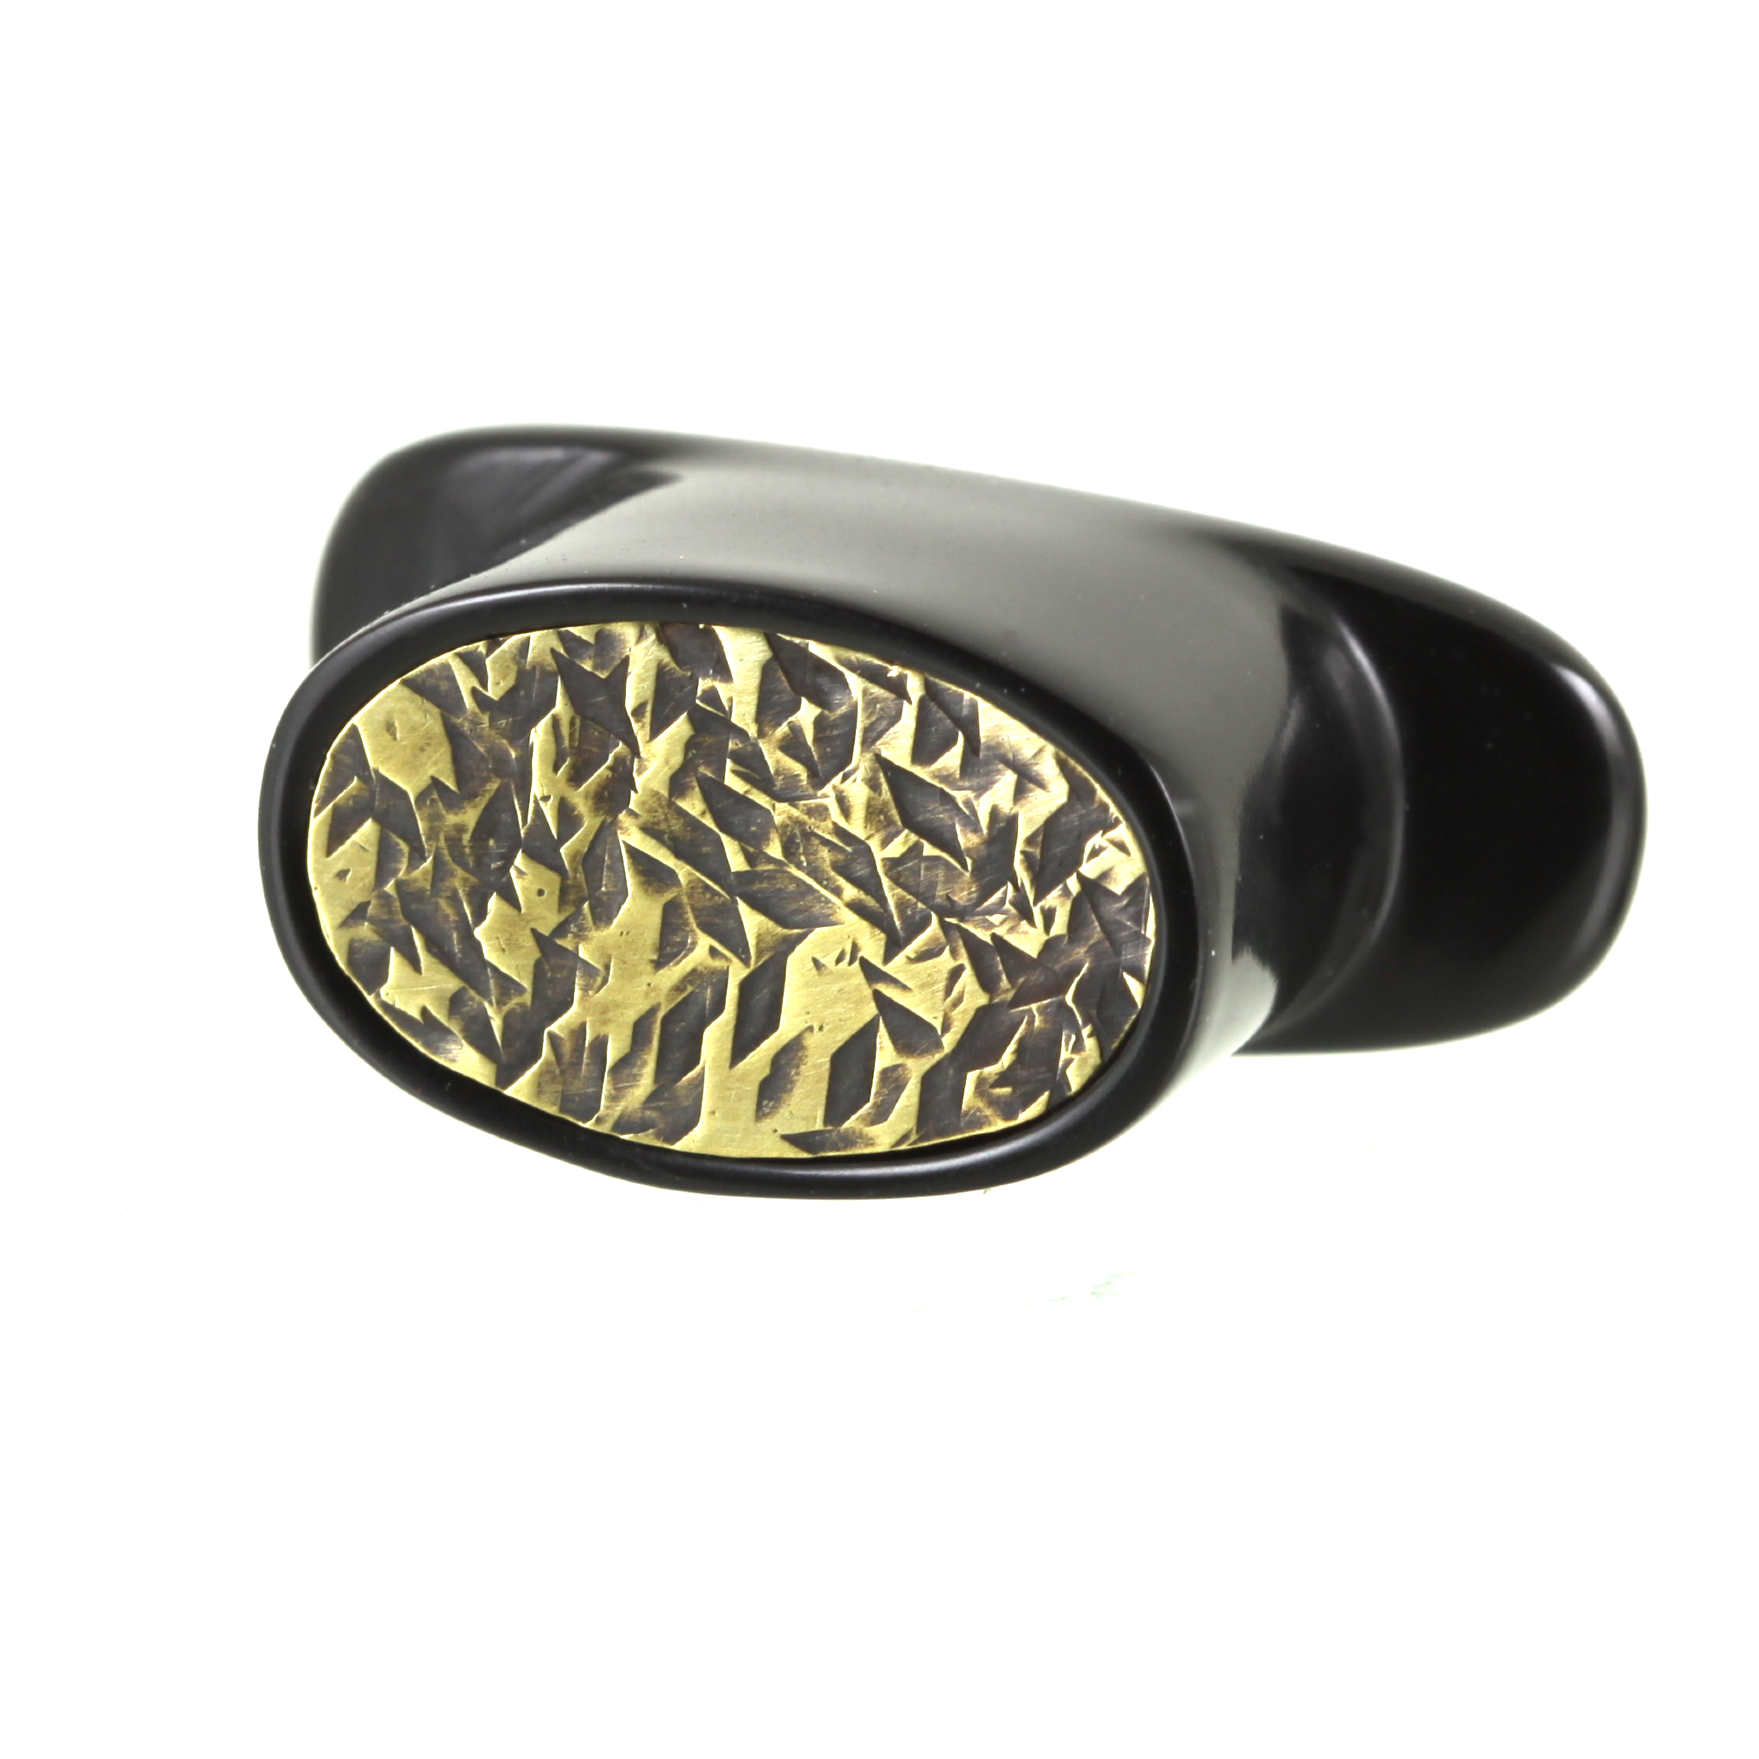 Delrin Oval Labret Plug - 'Camo' Texture Inlay